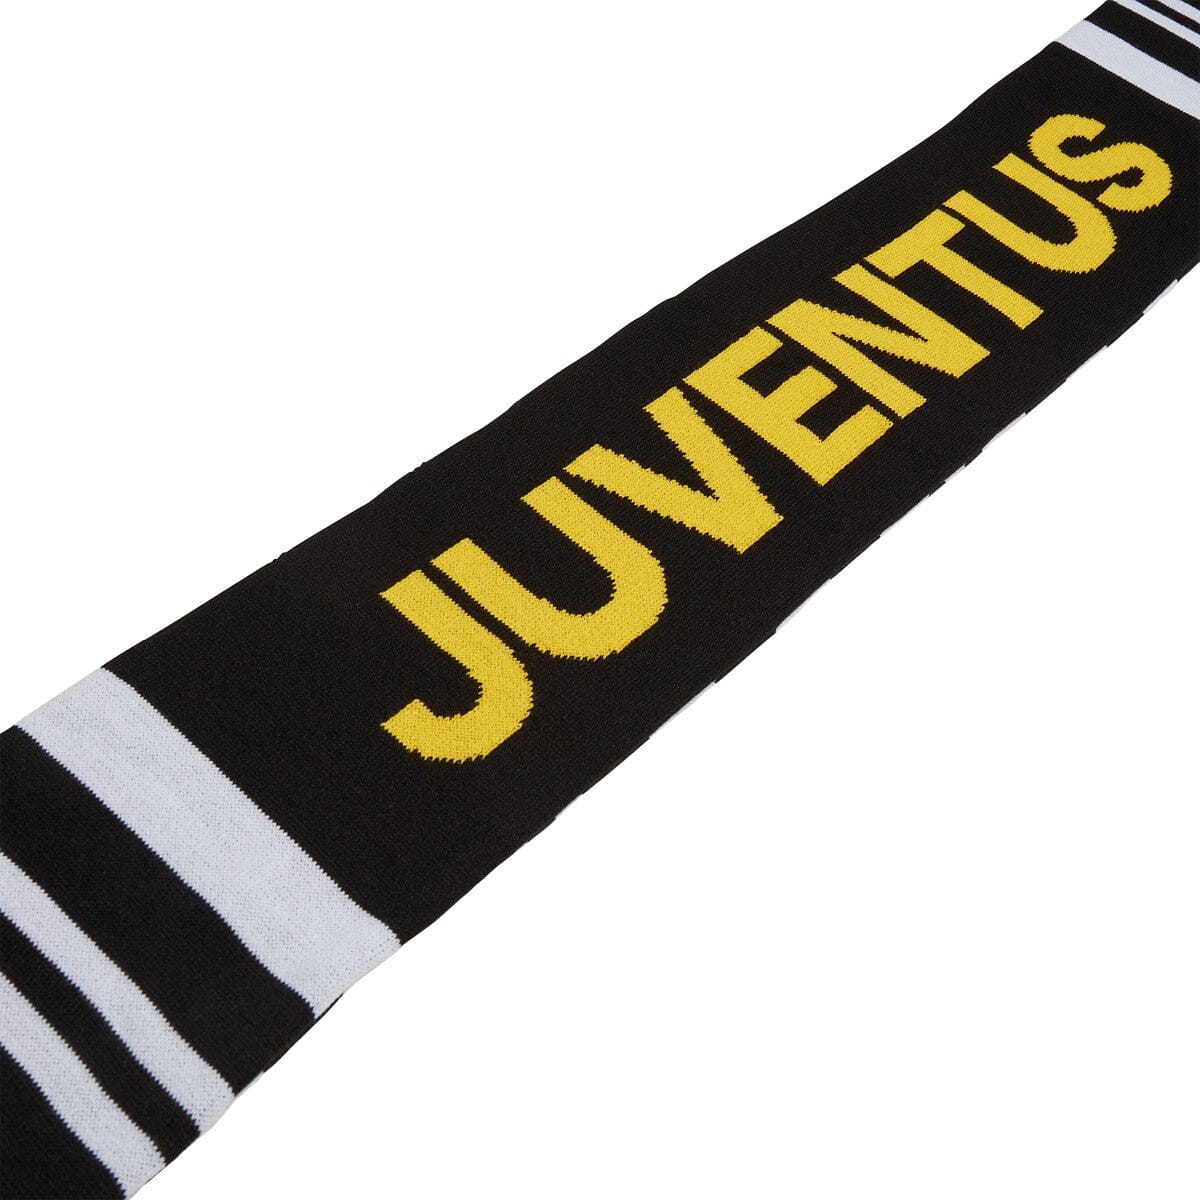 PREMIUM Juventus Soccer Jerseys & Apparel